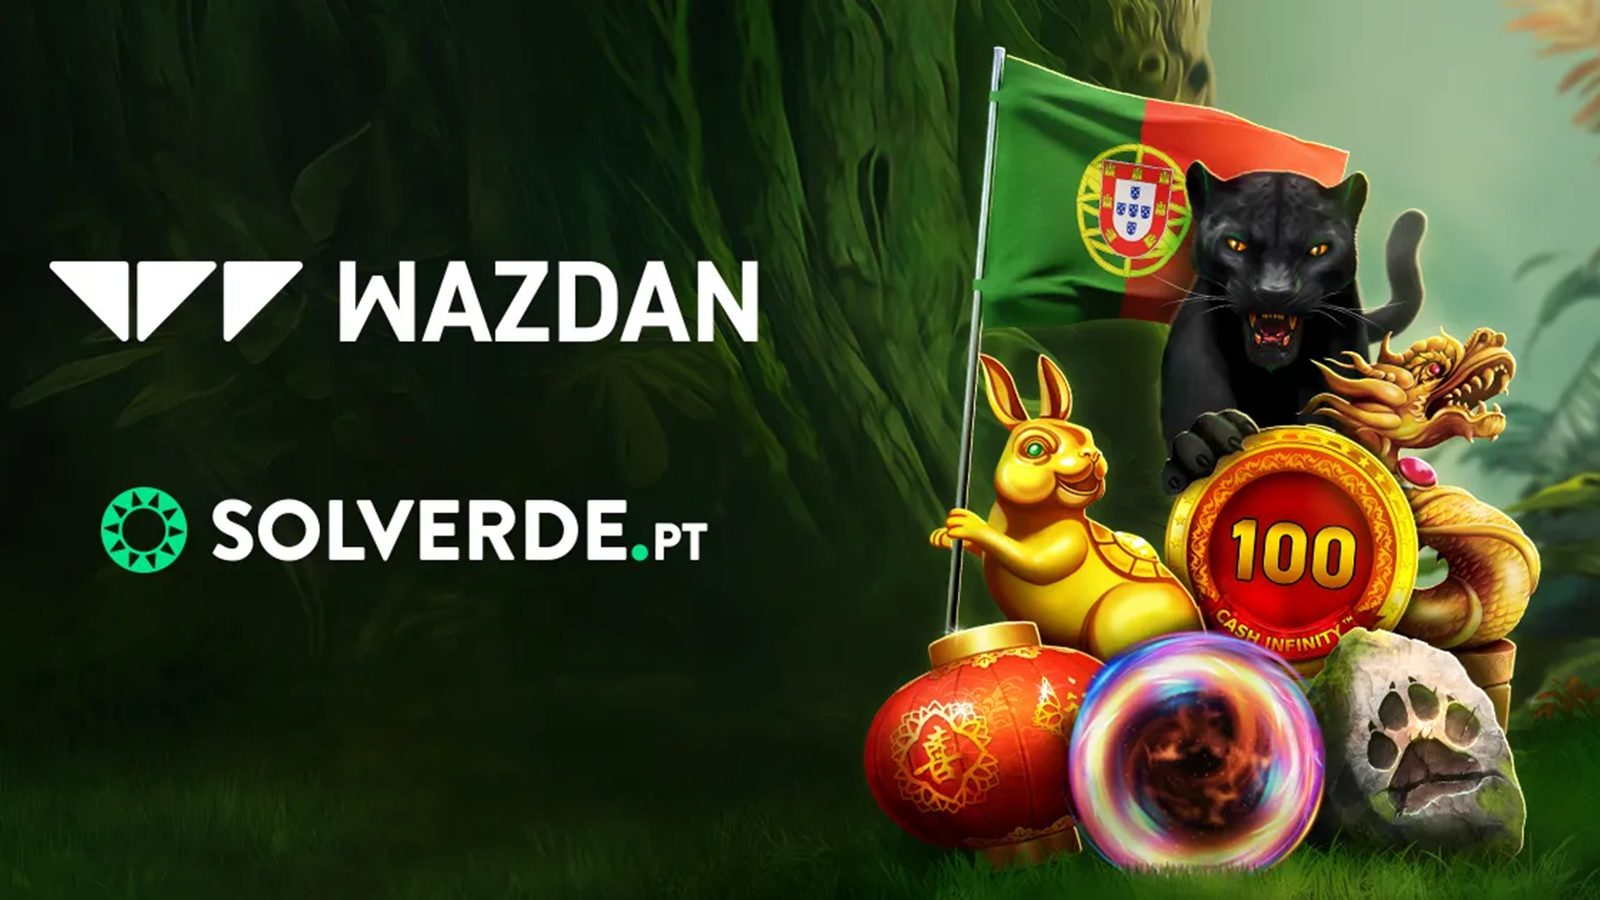 Wazdan's Partnership with Solverde.pt